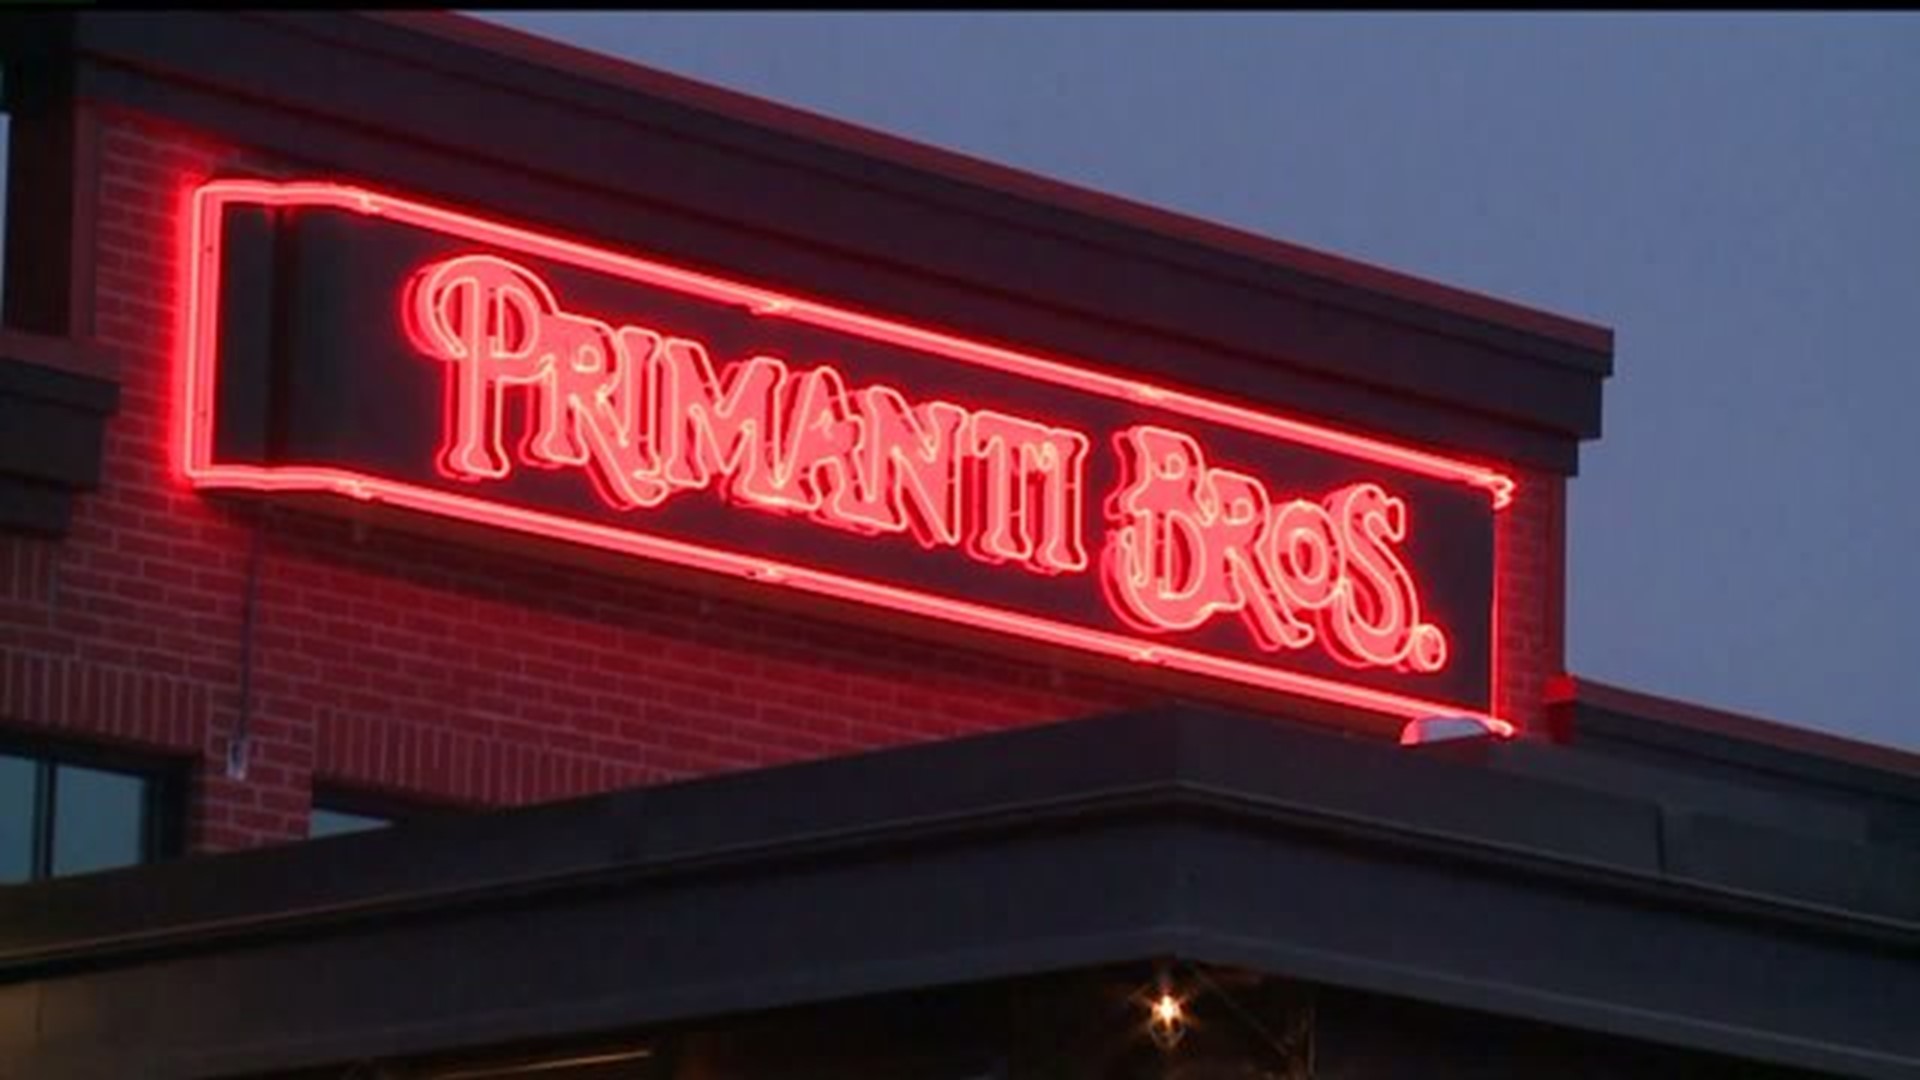 Primanti Bros. opens restaurant in York County